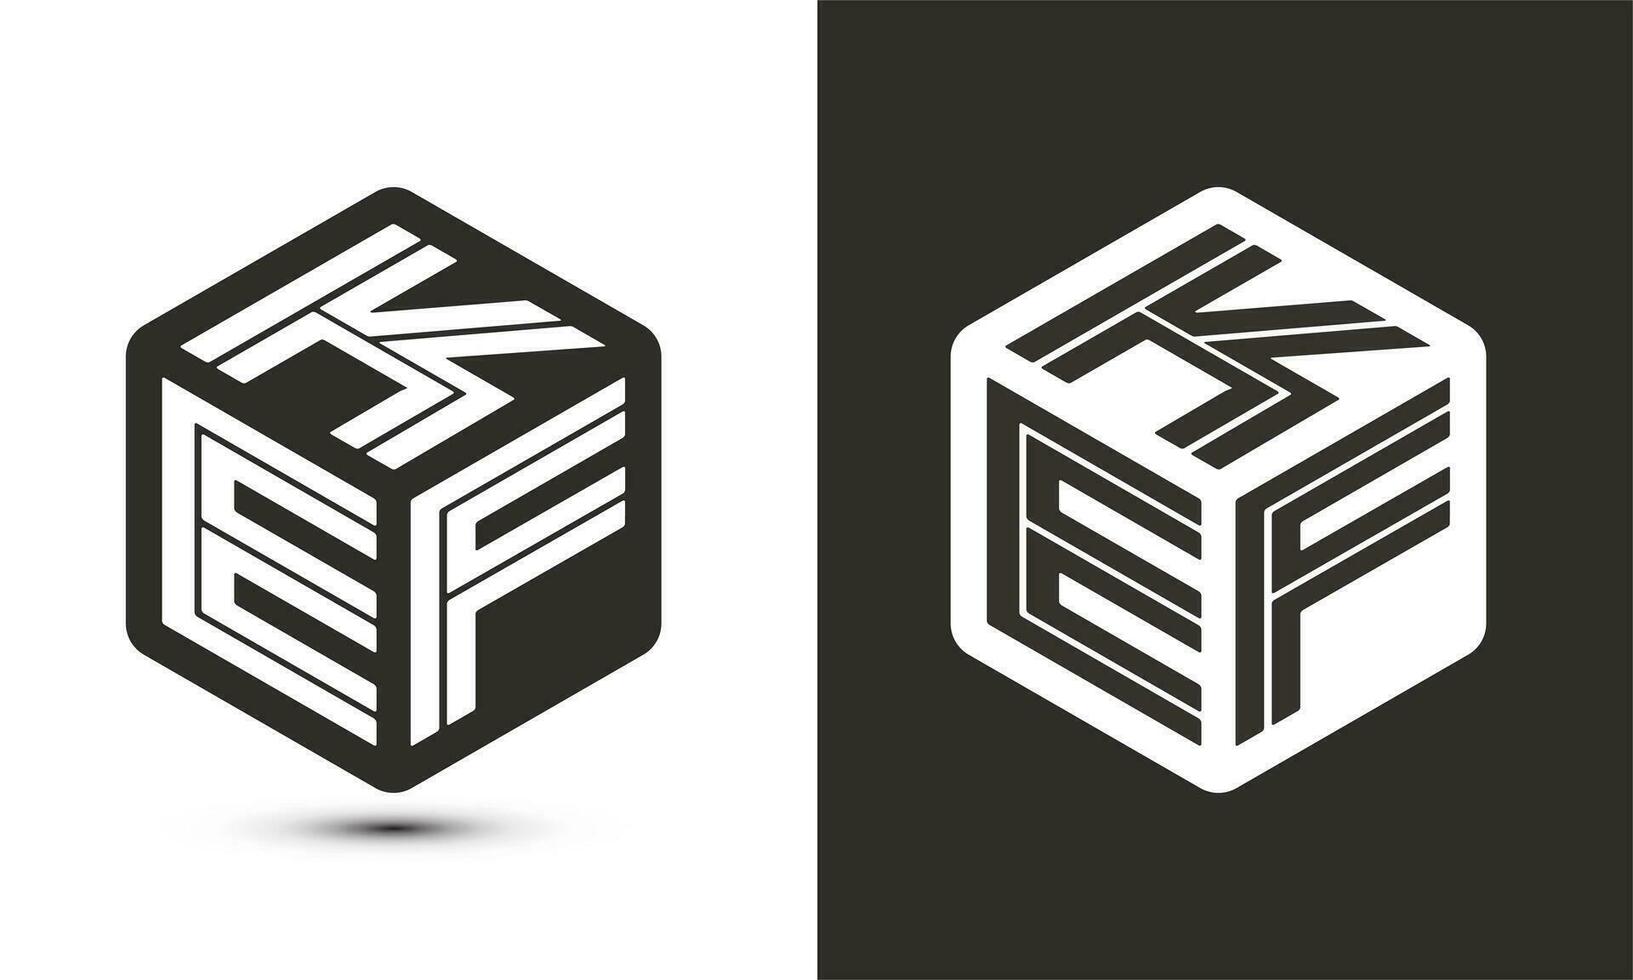 café letra logo diseño con ilustrador cubo logo, vector logo moderno alfabeto fuente superposición estilo.